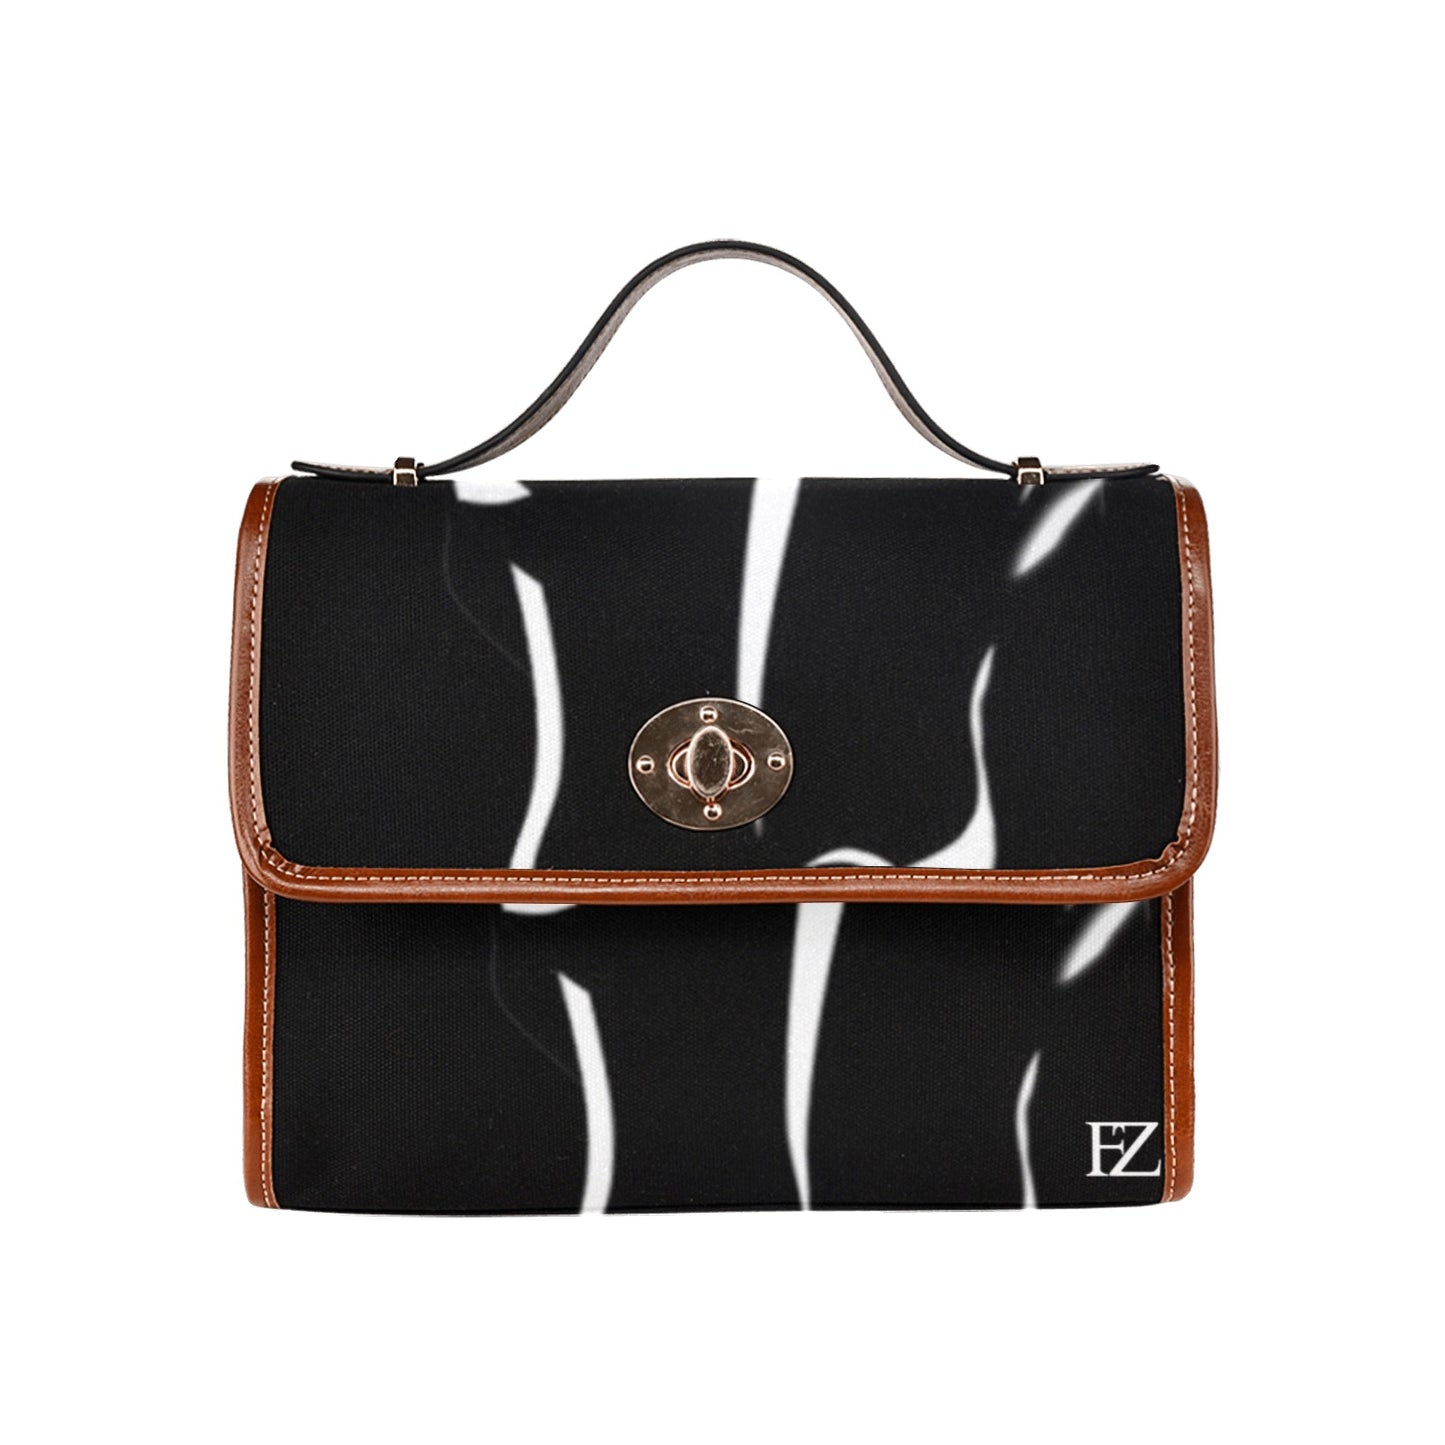 fz bull handbag one size / fz bull handbag - black all over print waterproof canvas bag(model1641)(brown strap)